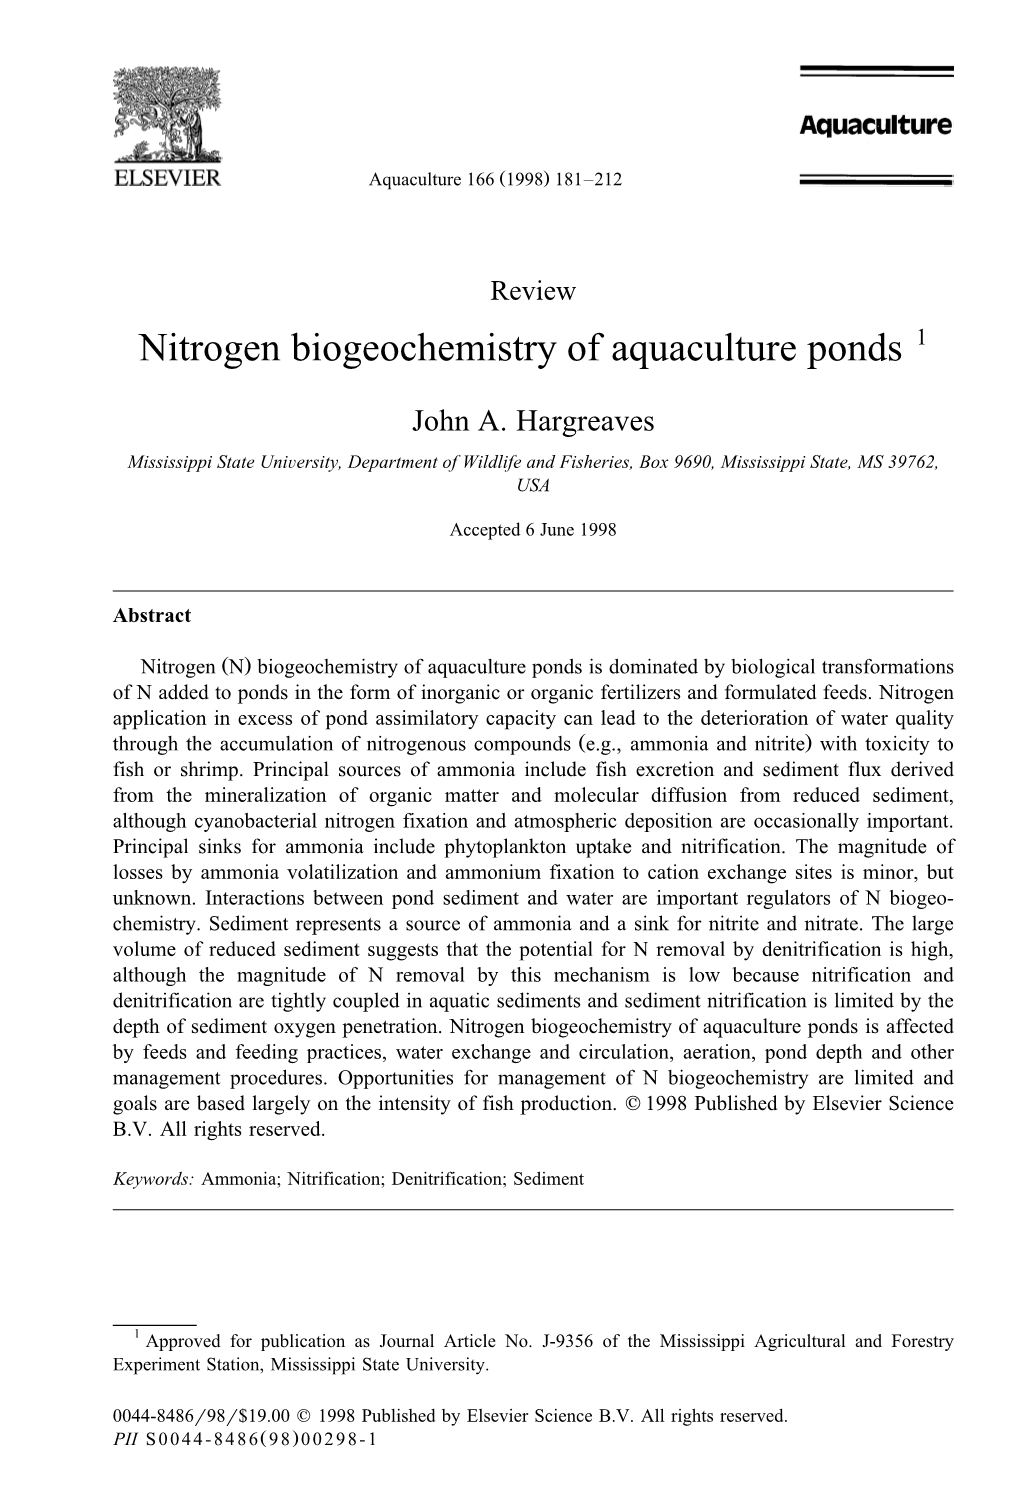 Nitrogen Biogeochemistry of Aquaculture Ponds 1